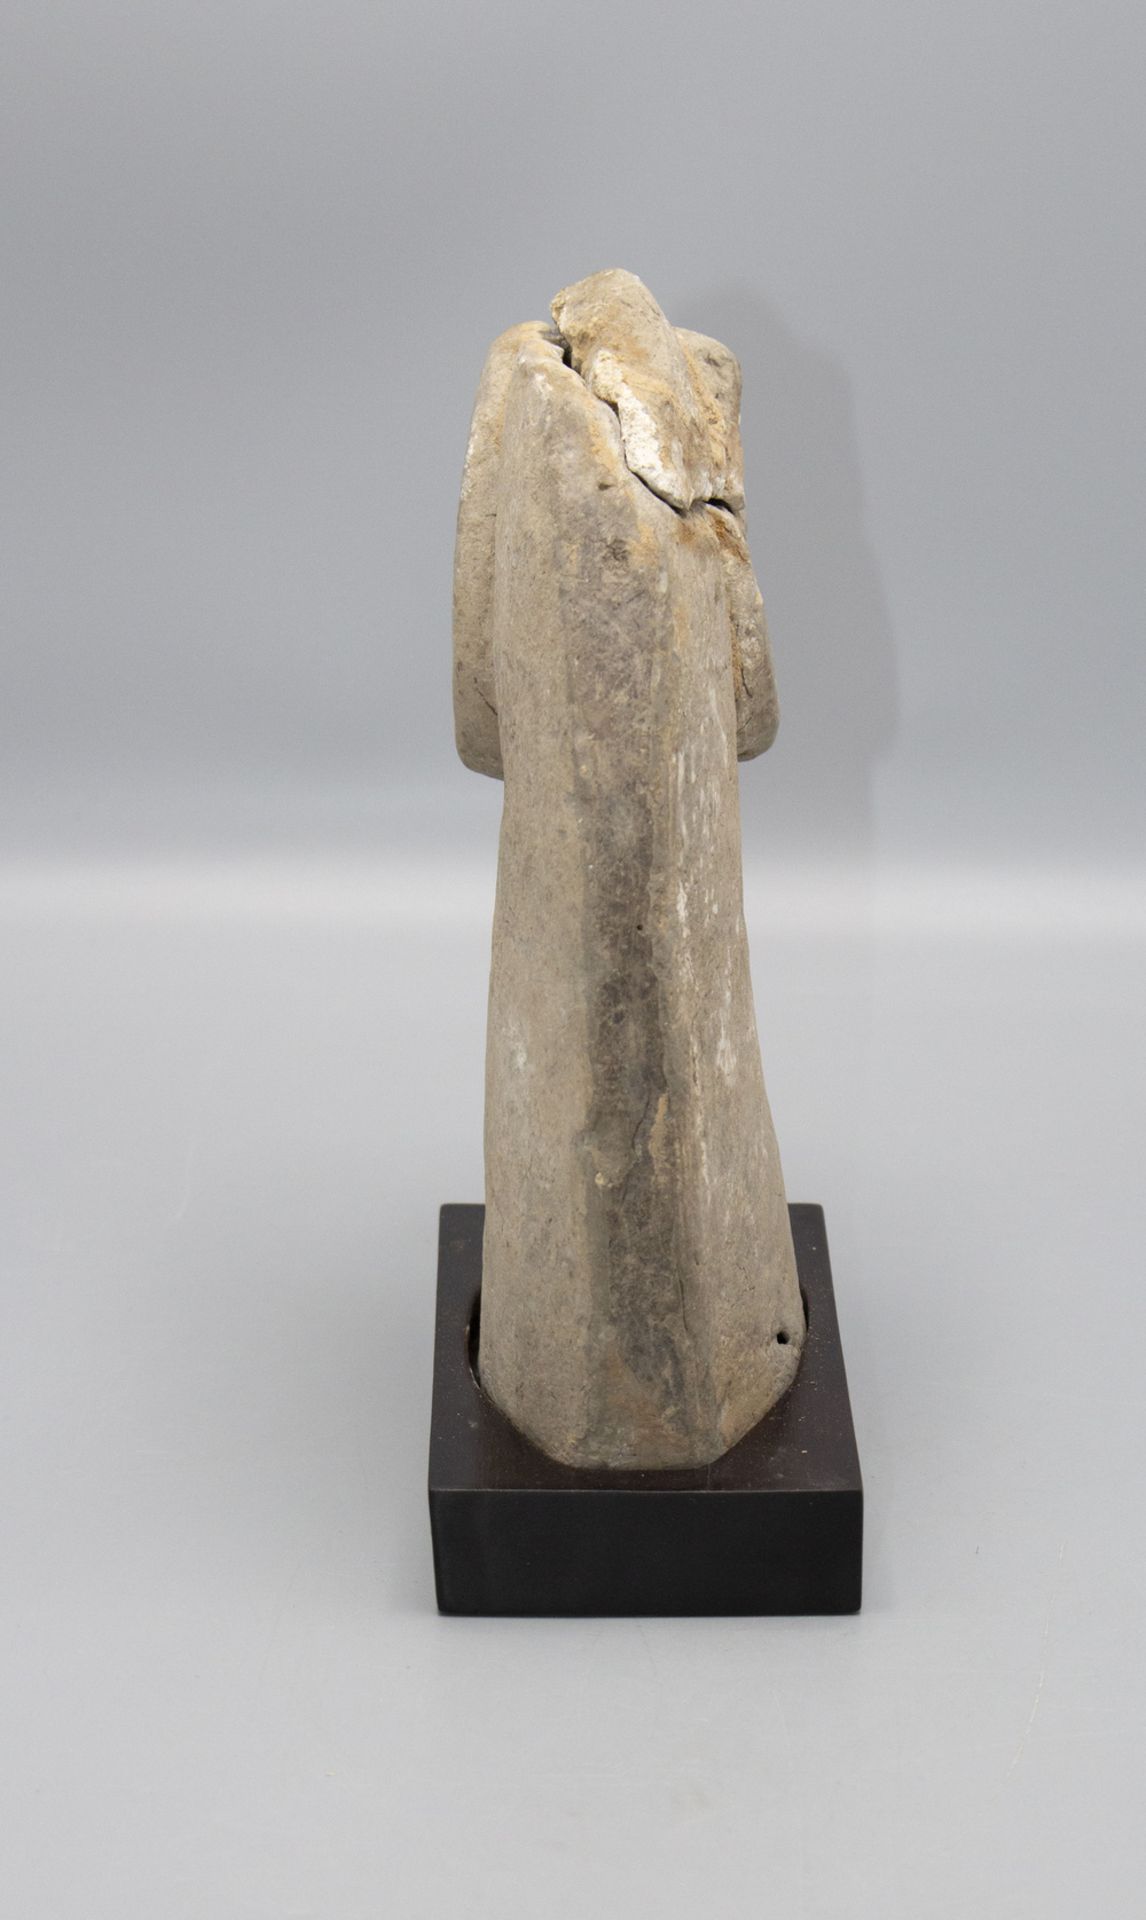 Pferdekopf / A horse head, wohl altes China, wohl Han-Dynastie, 206 v. Chr.-220 n. Chr. - Image 4 of 5